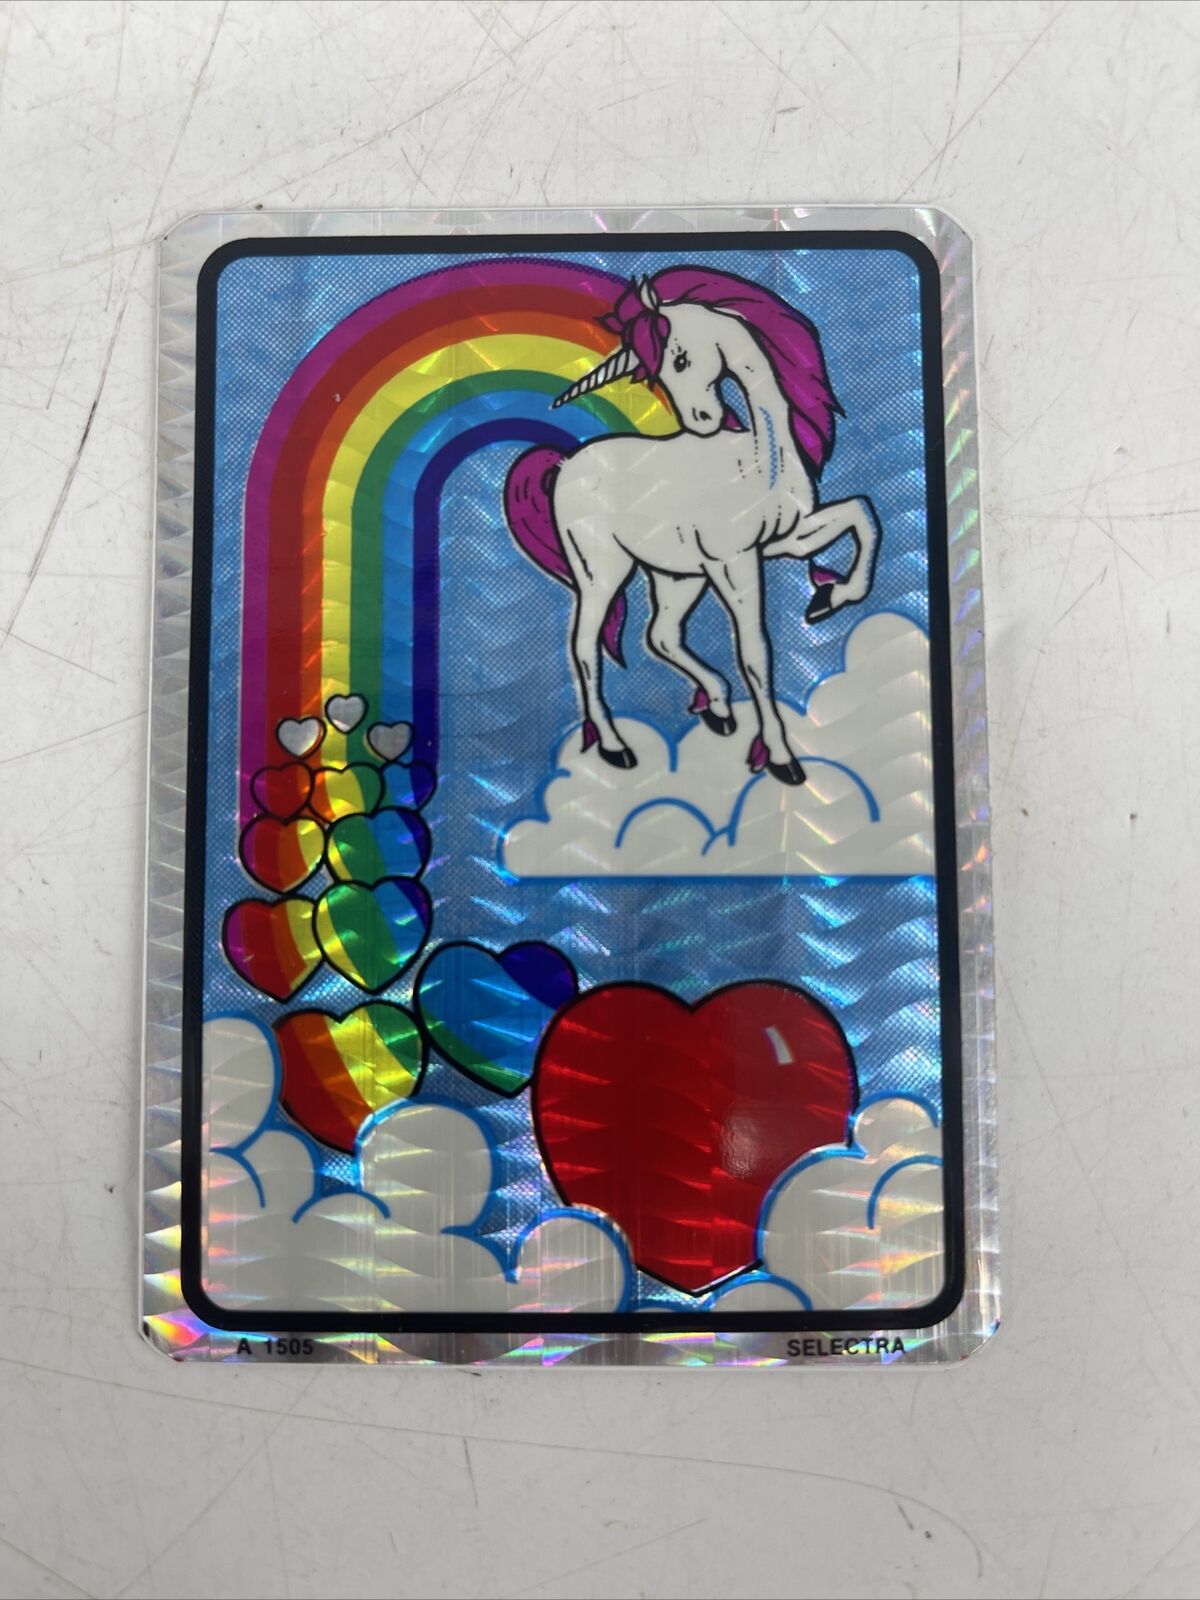 RARE Vintage 1980s Unicorn Rainbow Prism Vending Machine Sticker Selectra A 1505